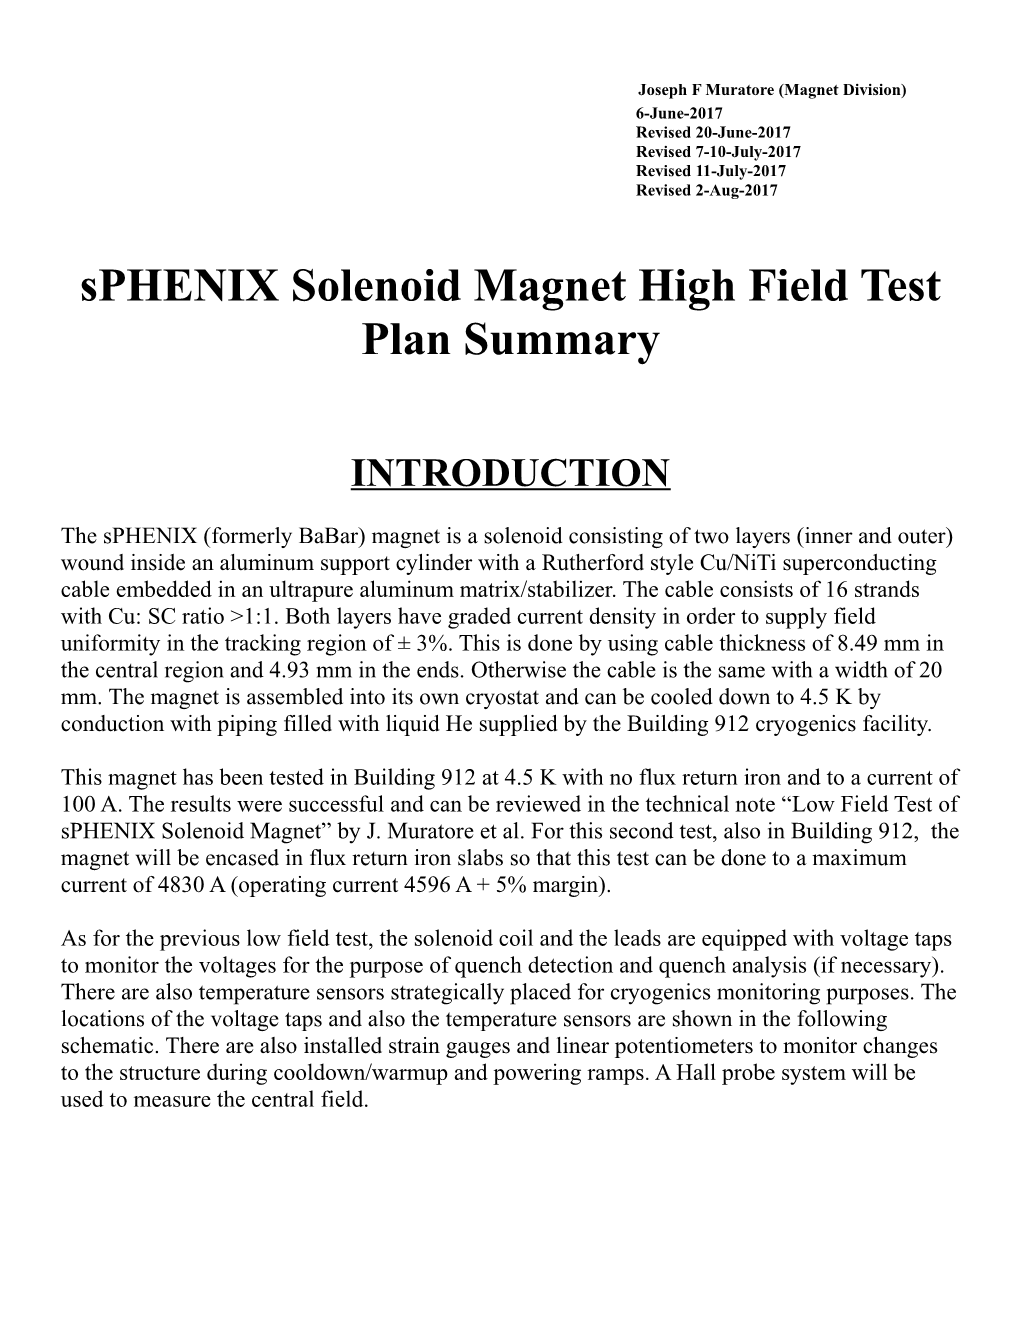 Run Plan for the High-Field Test Written by J. Muratore